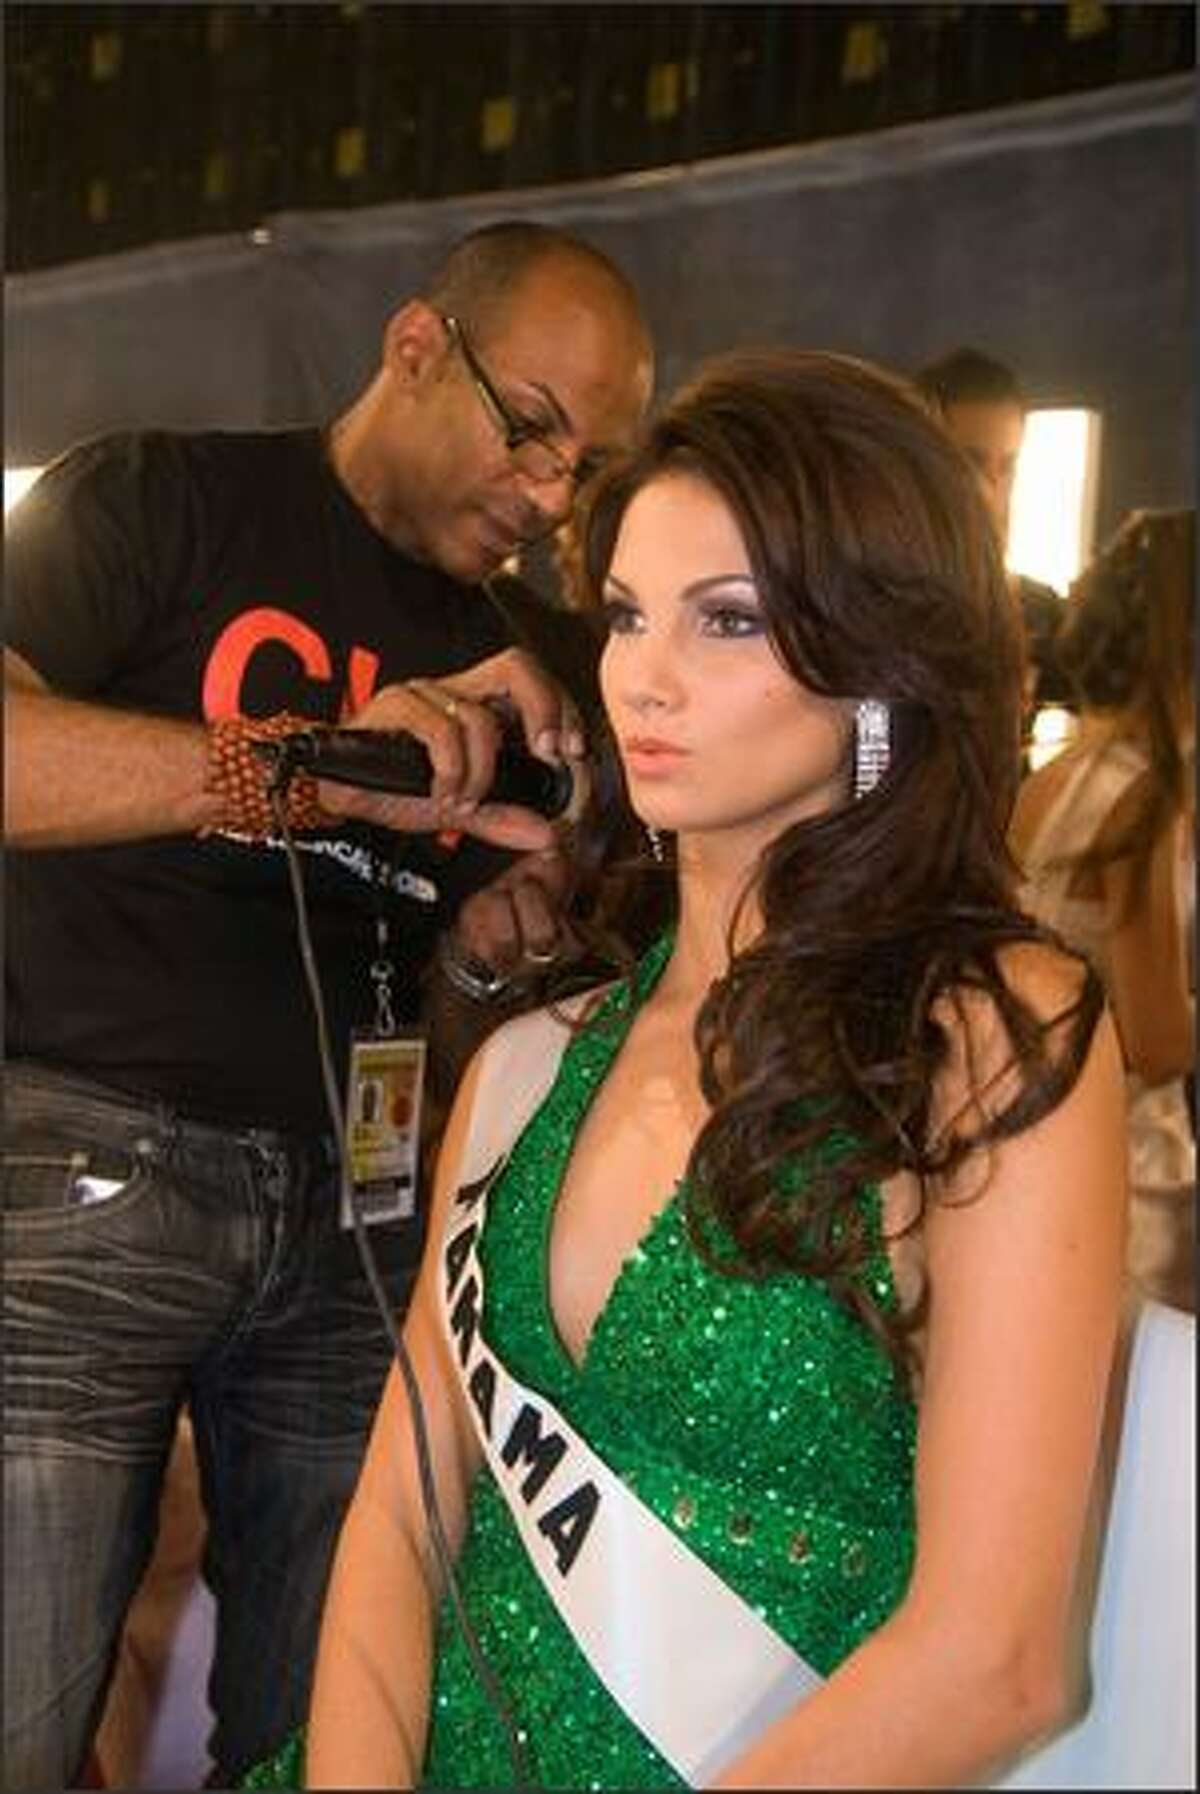 A hair stylist puts finishing touches on Carolina Dementiev Justavino, Miss Panama.